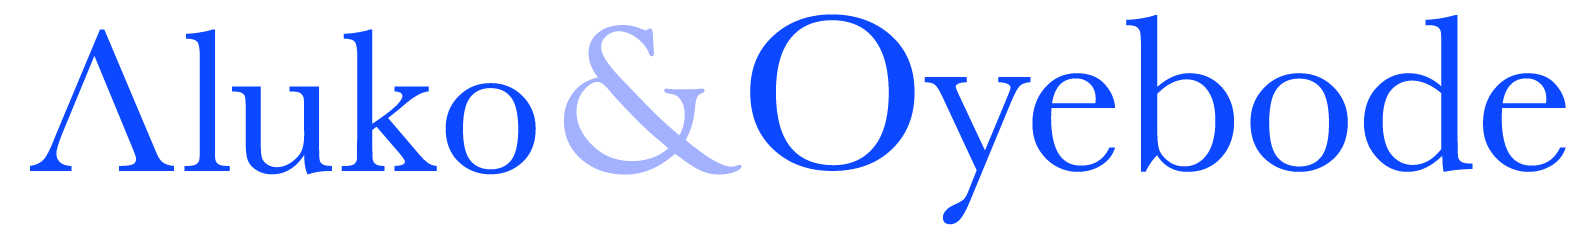 A&O_Logo.jpg